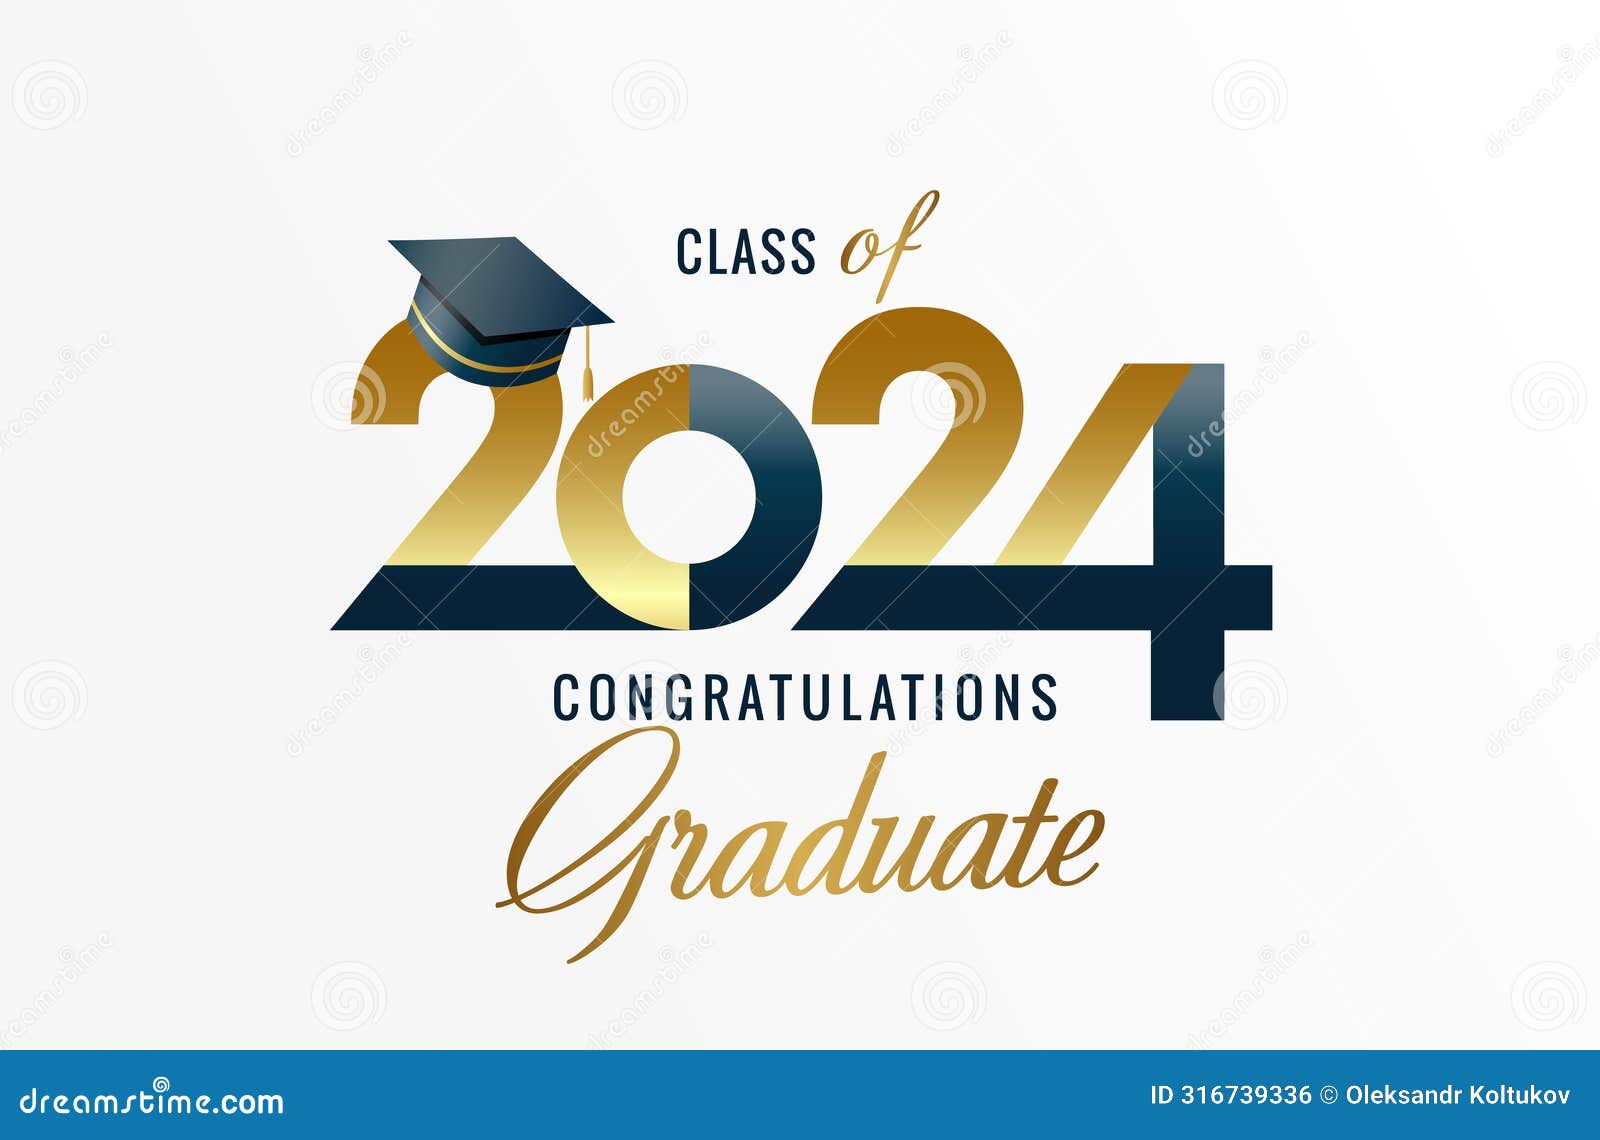 class of 2024, congratulation graduate typography logo 